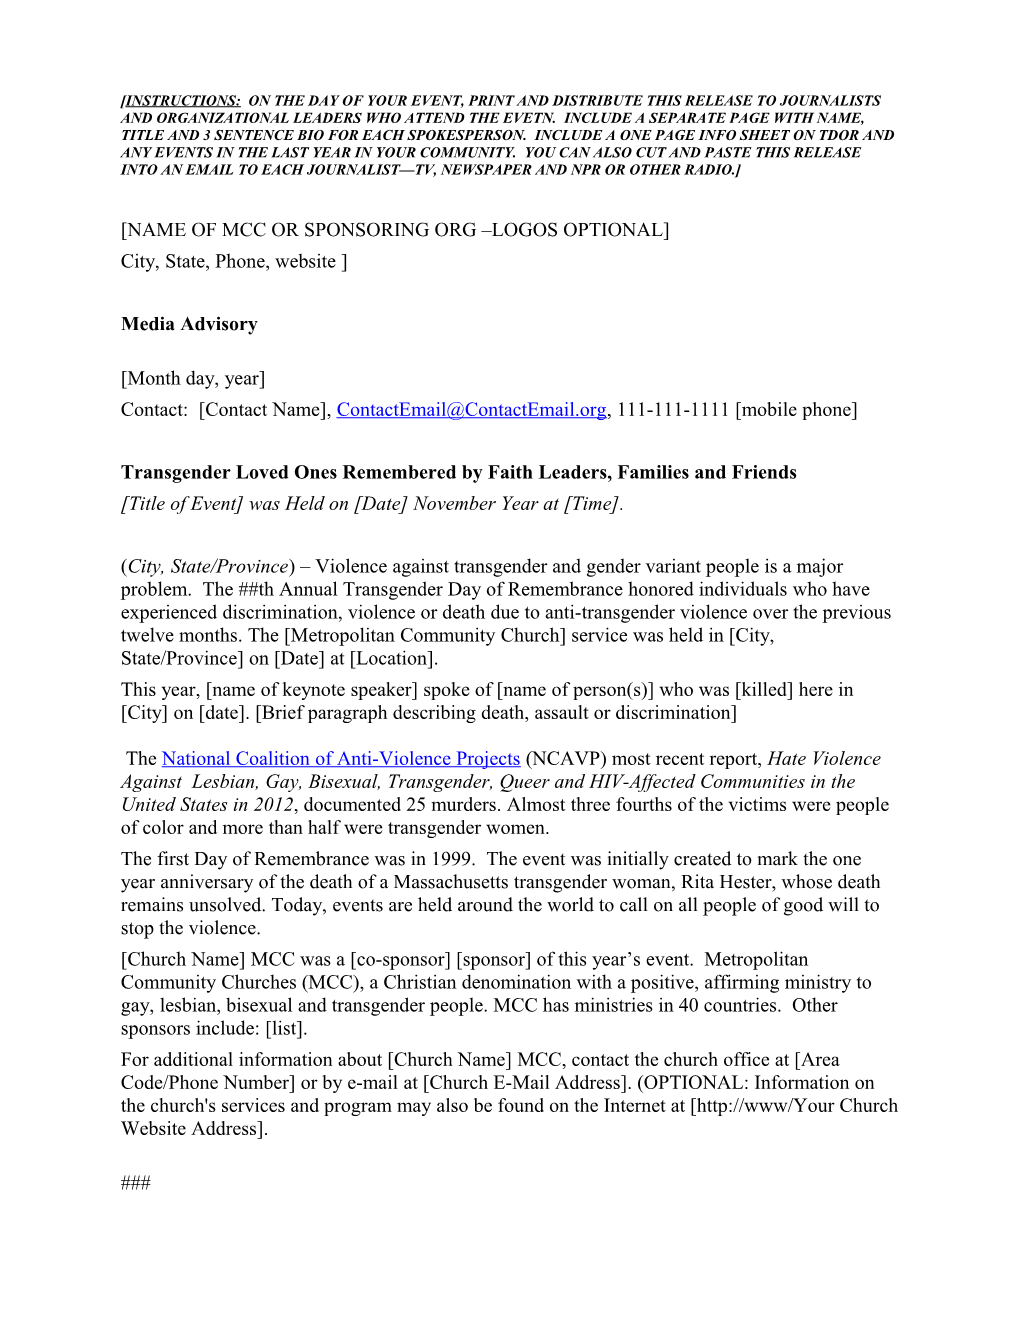 MCC Congregational TDOR Press Release